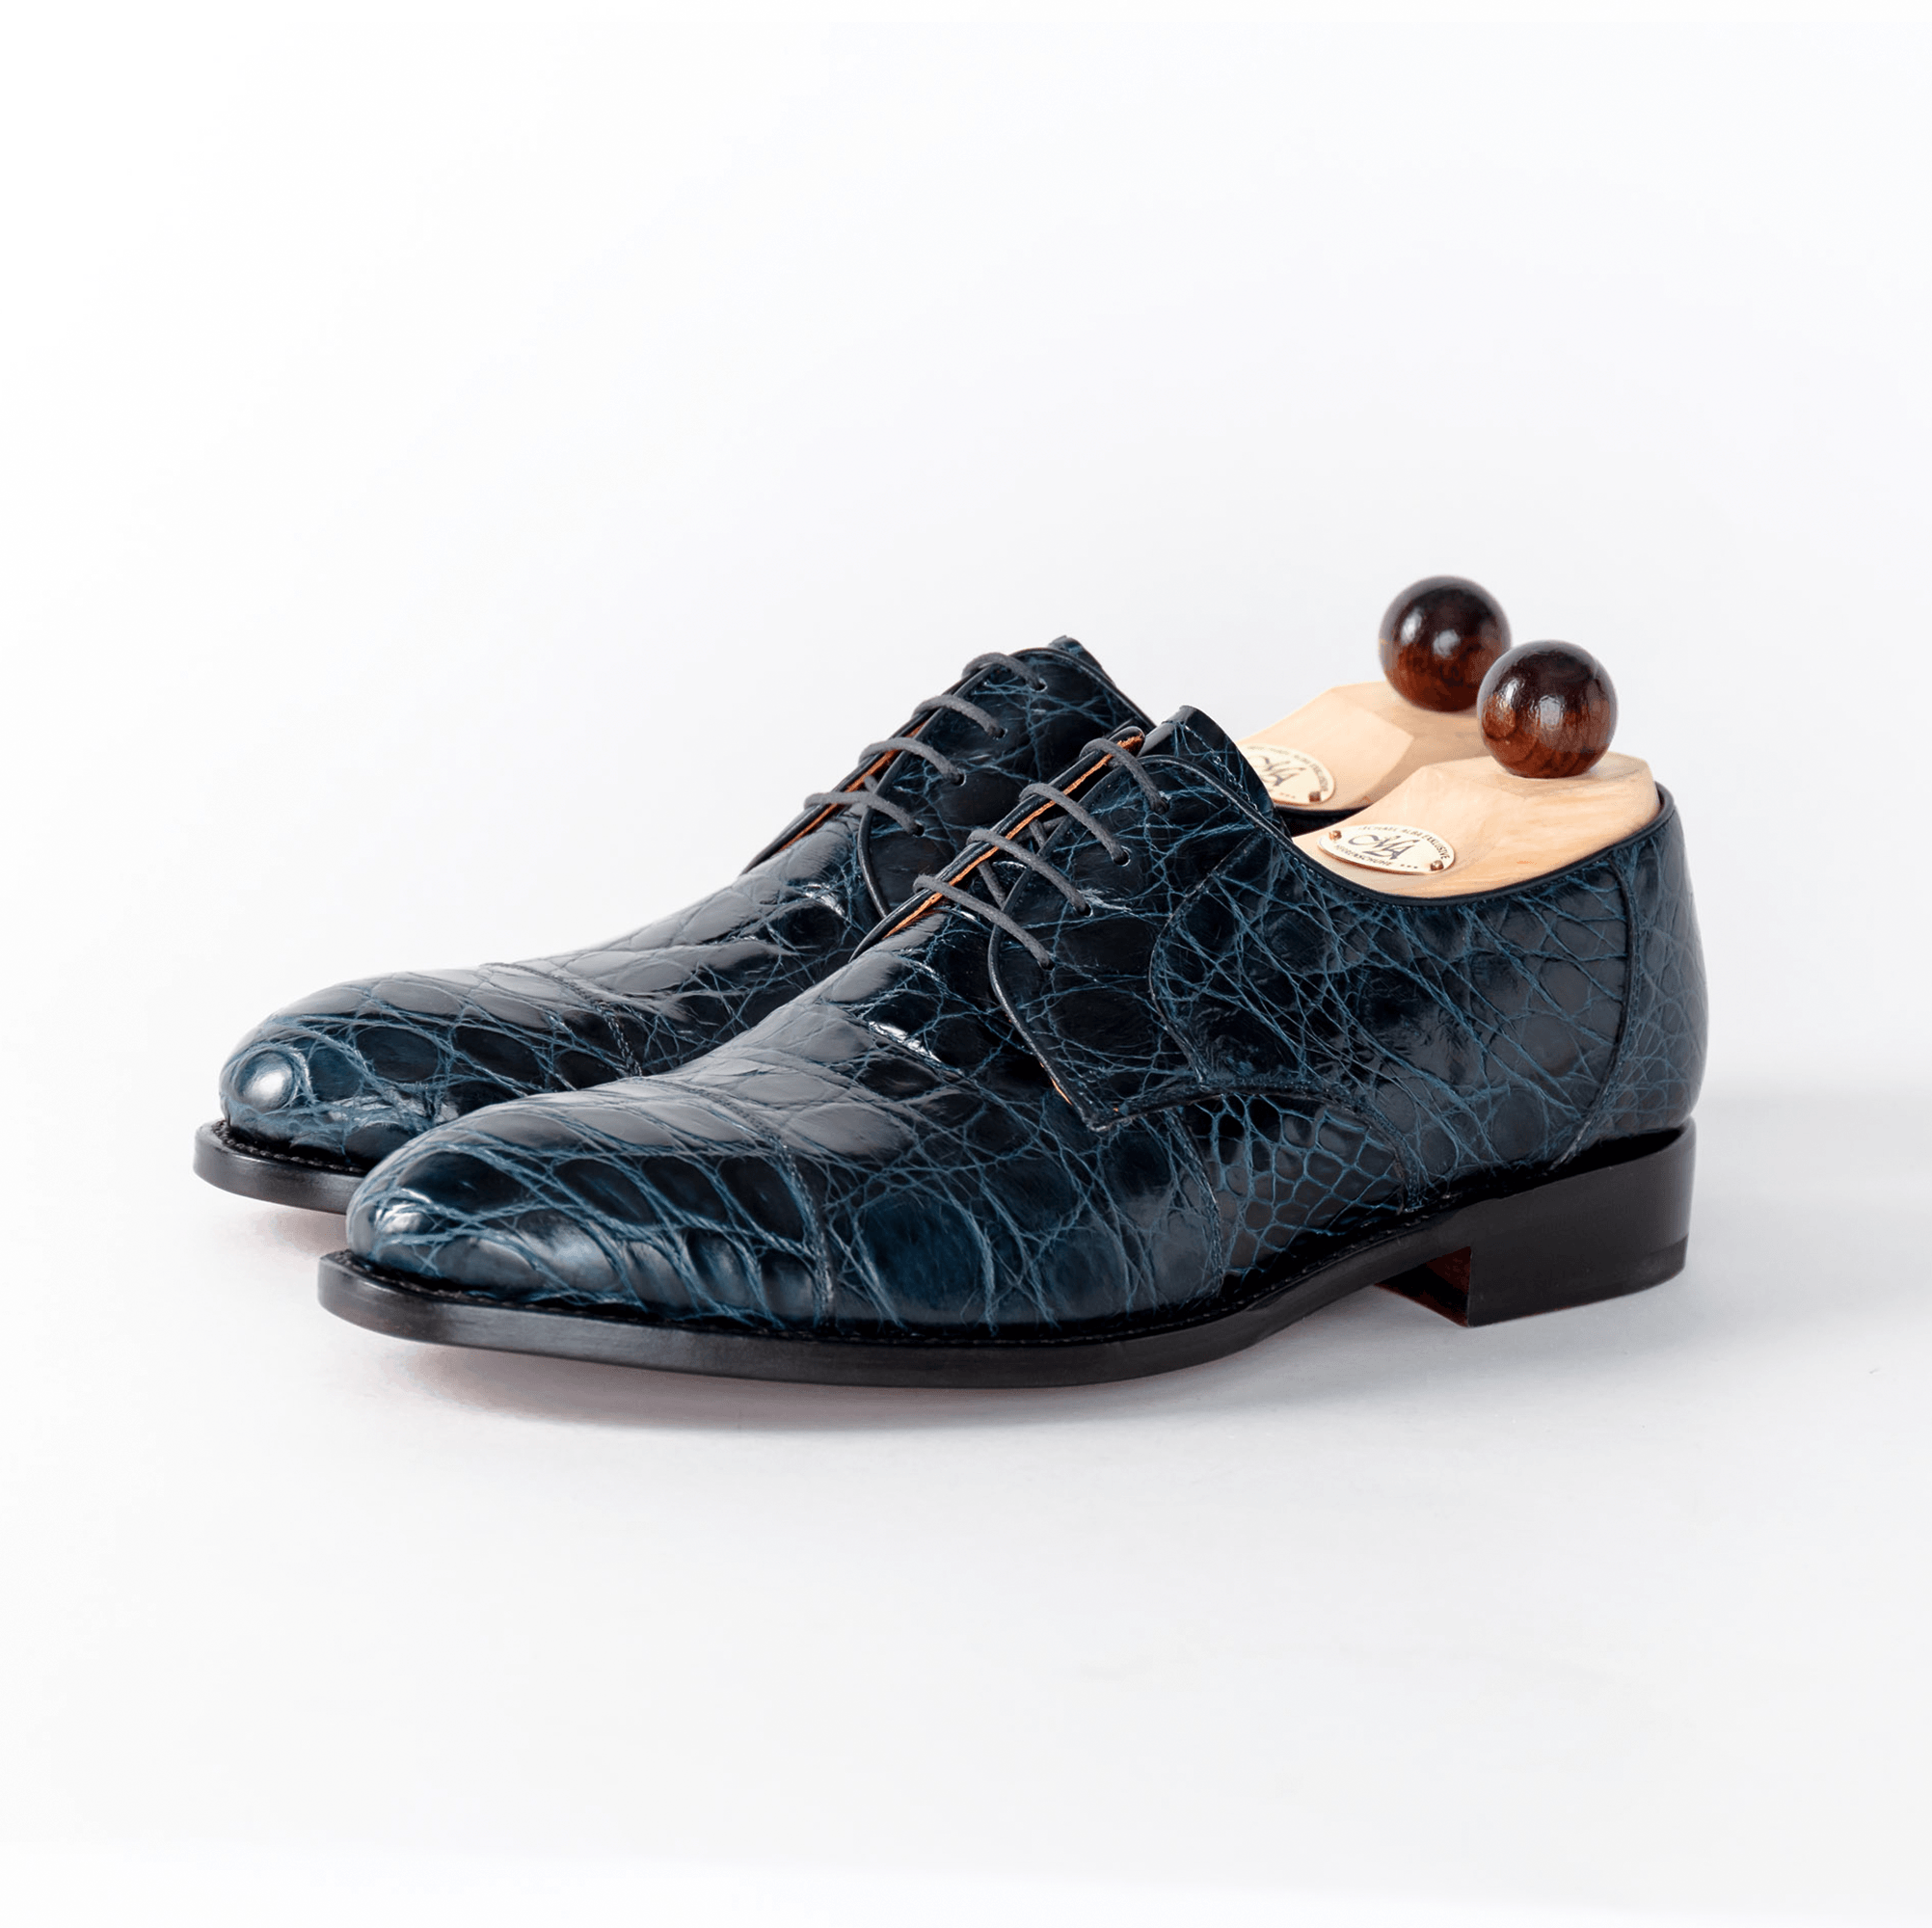 Echt Crocco Leder - Blau&Navy - Michael & Albina Exklusive Schuhe - Online Shop